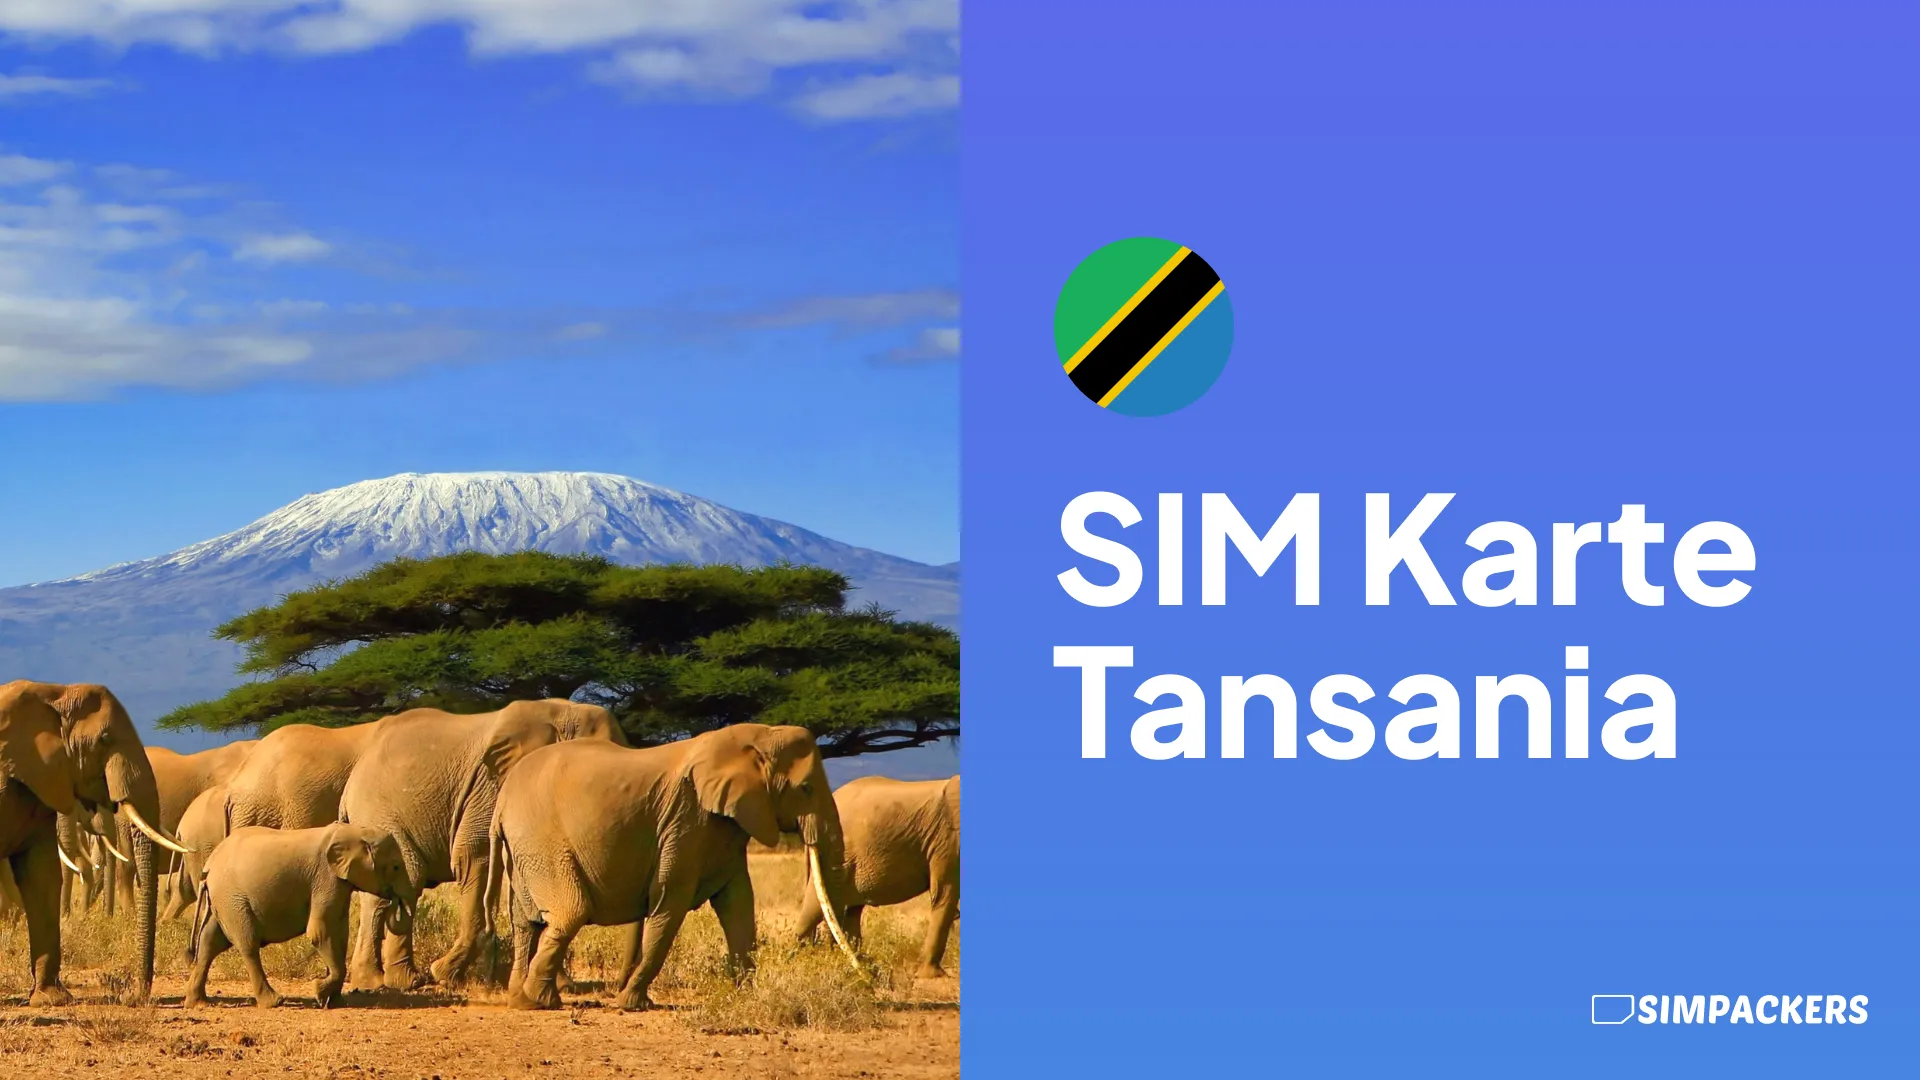 DE/FEATURED_IMAGES/sim-karte-tansania.webp